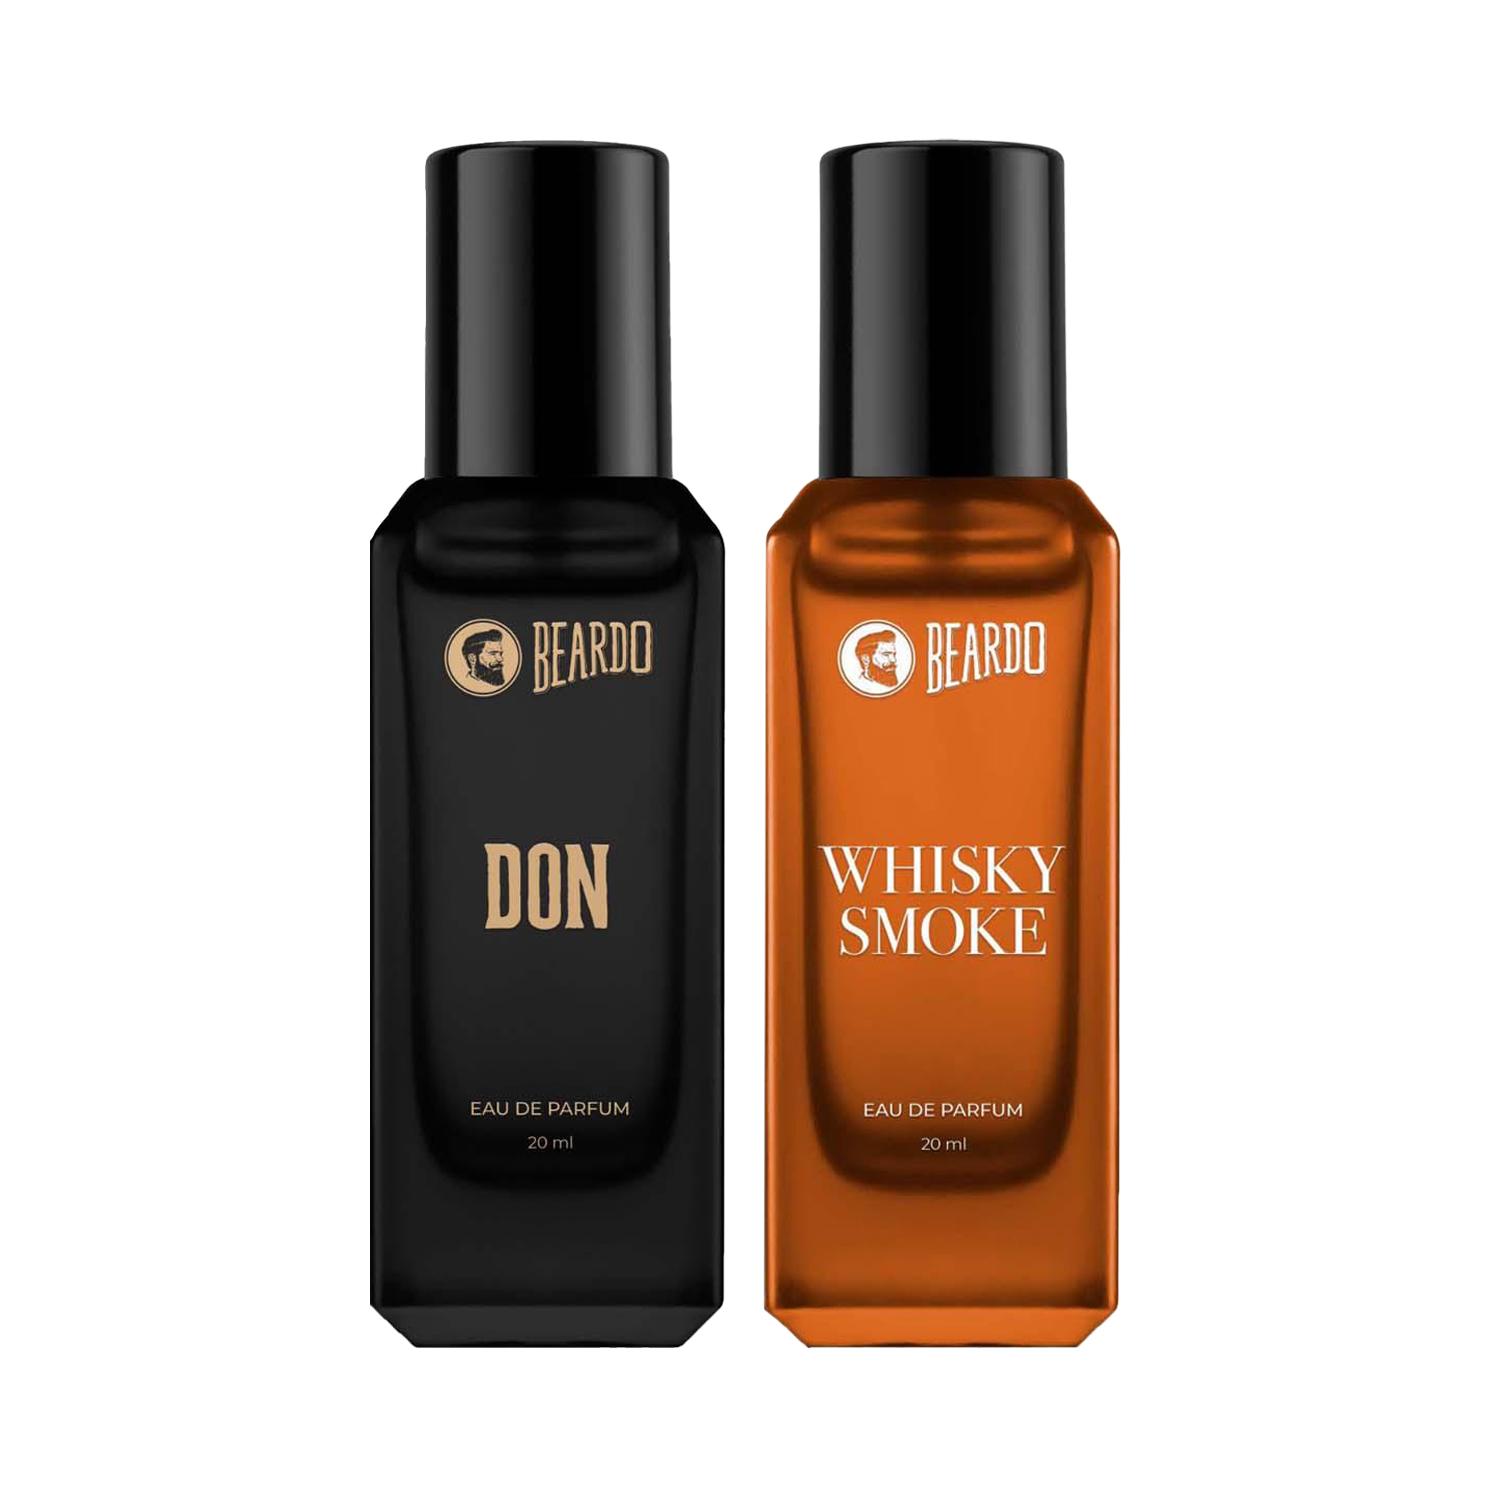 Beardo | Beardo Don Perfume & Whisky Smoke Perfume for Men, Spicy, Woody - Oudh Combo